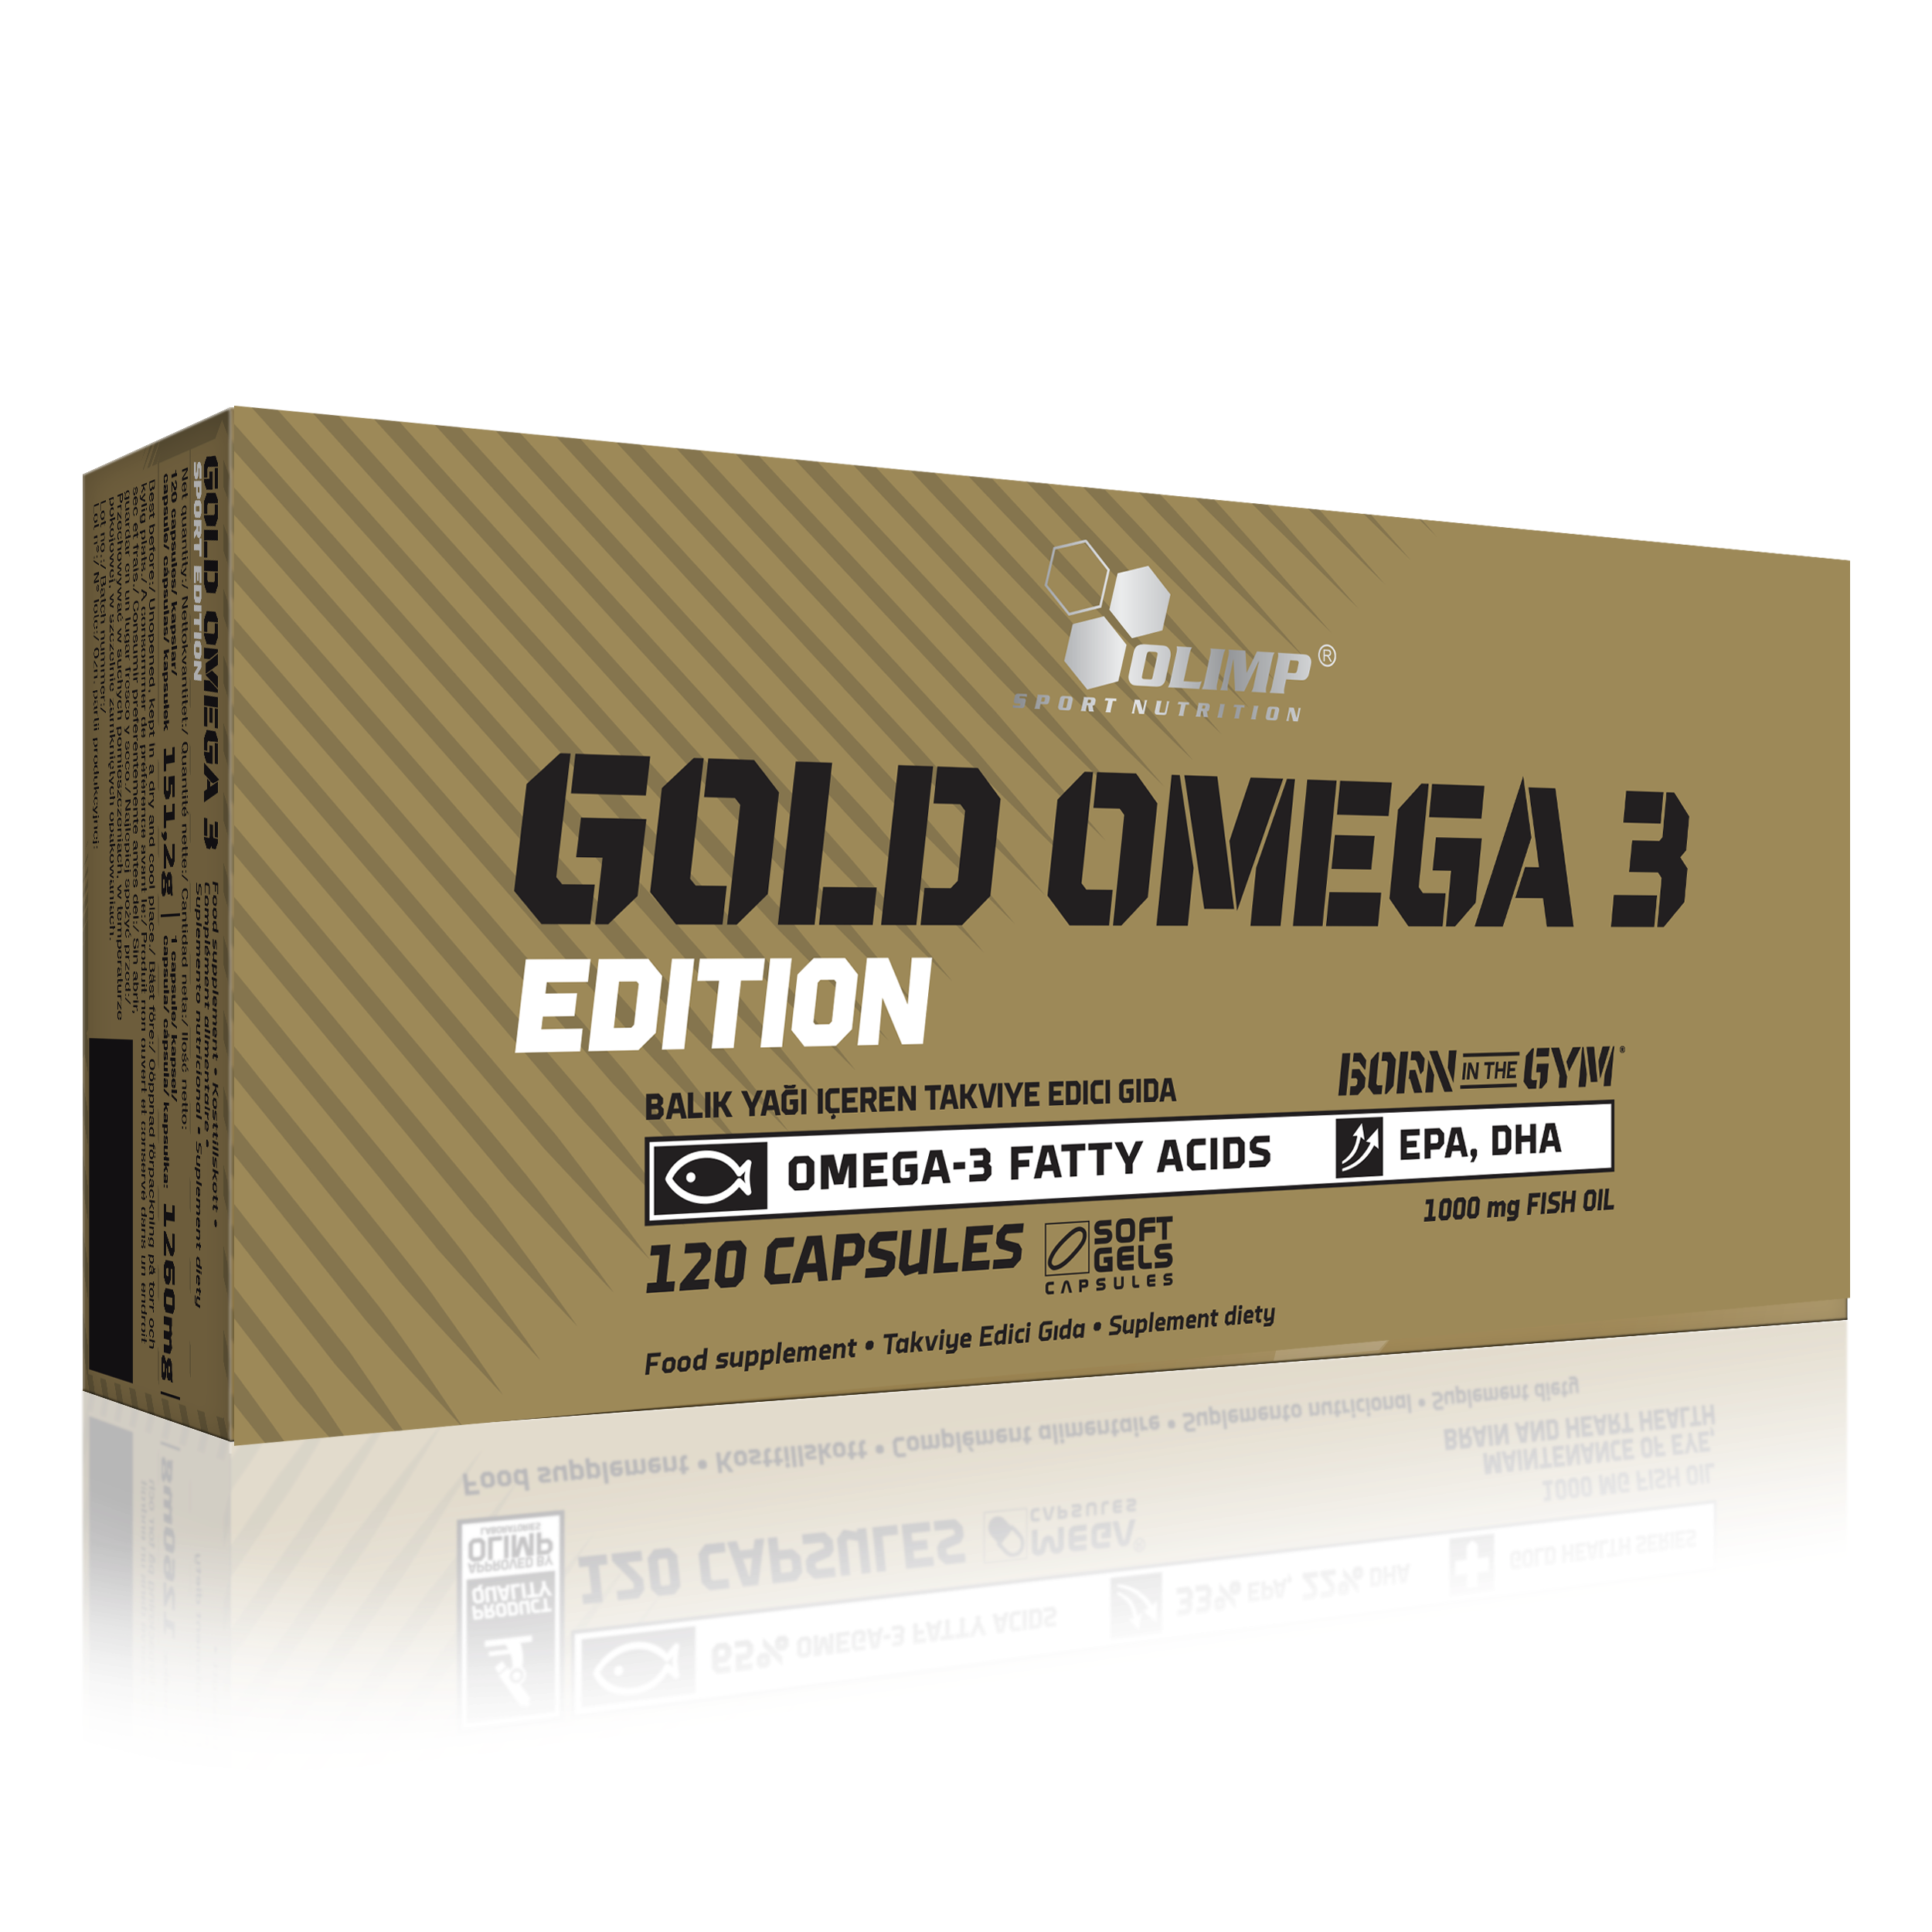 OL GOLD OMEGA 3 SPORT EDITION 120 CAPSULES